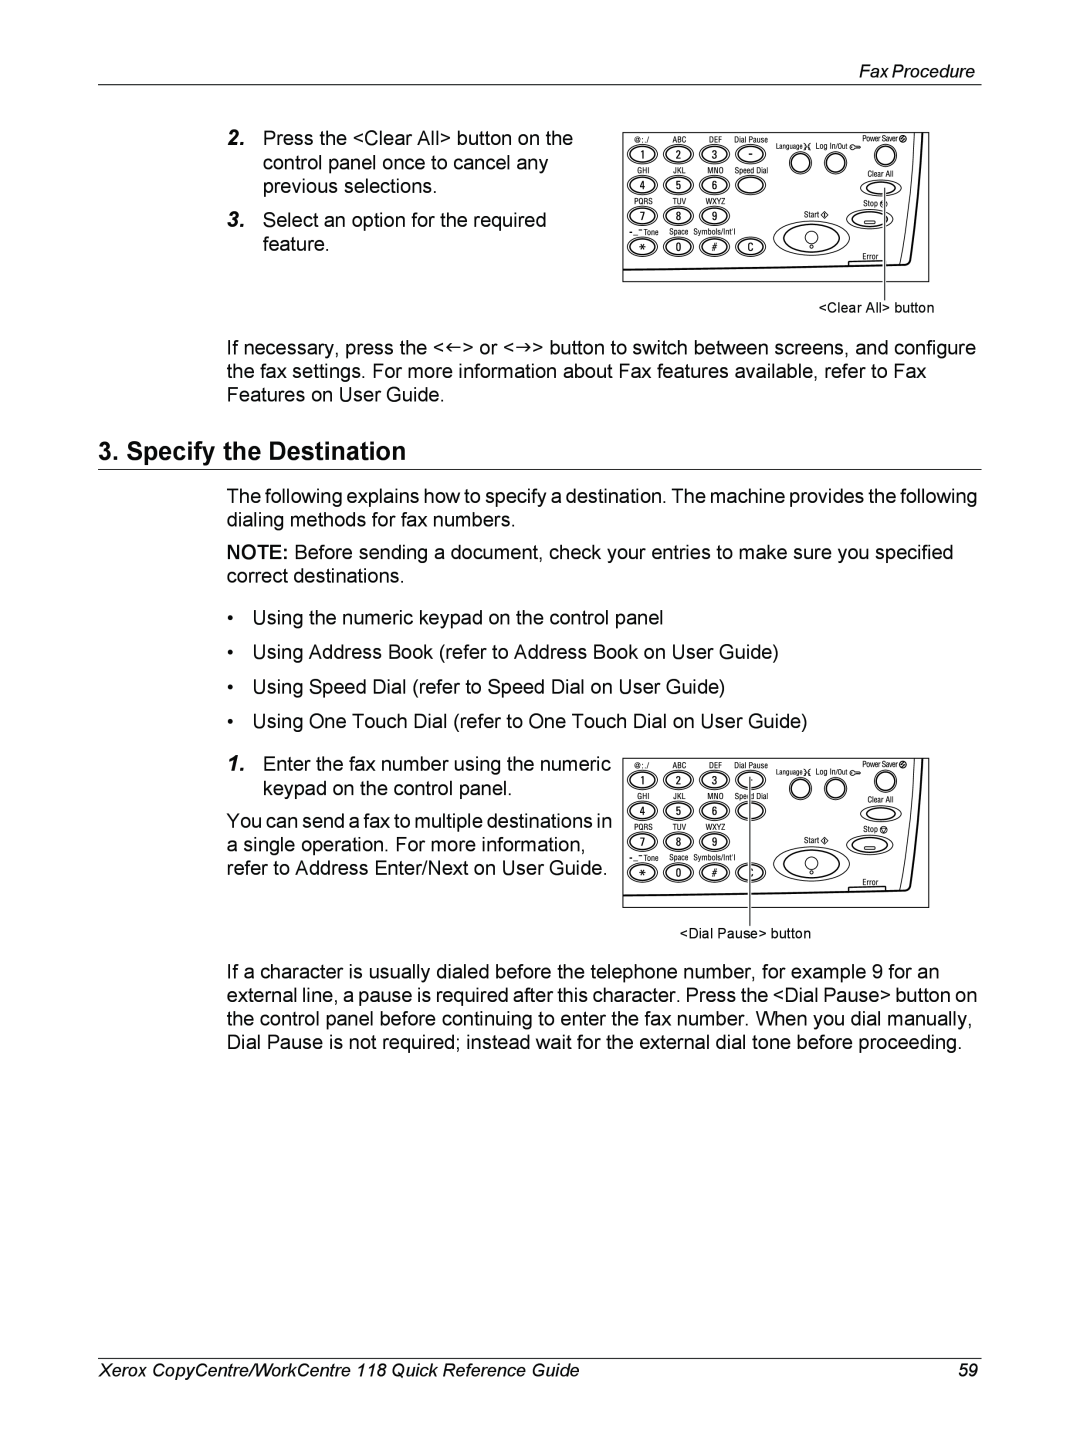 Xerox M118i, C118 manual Specify the Destination 